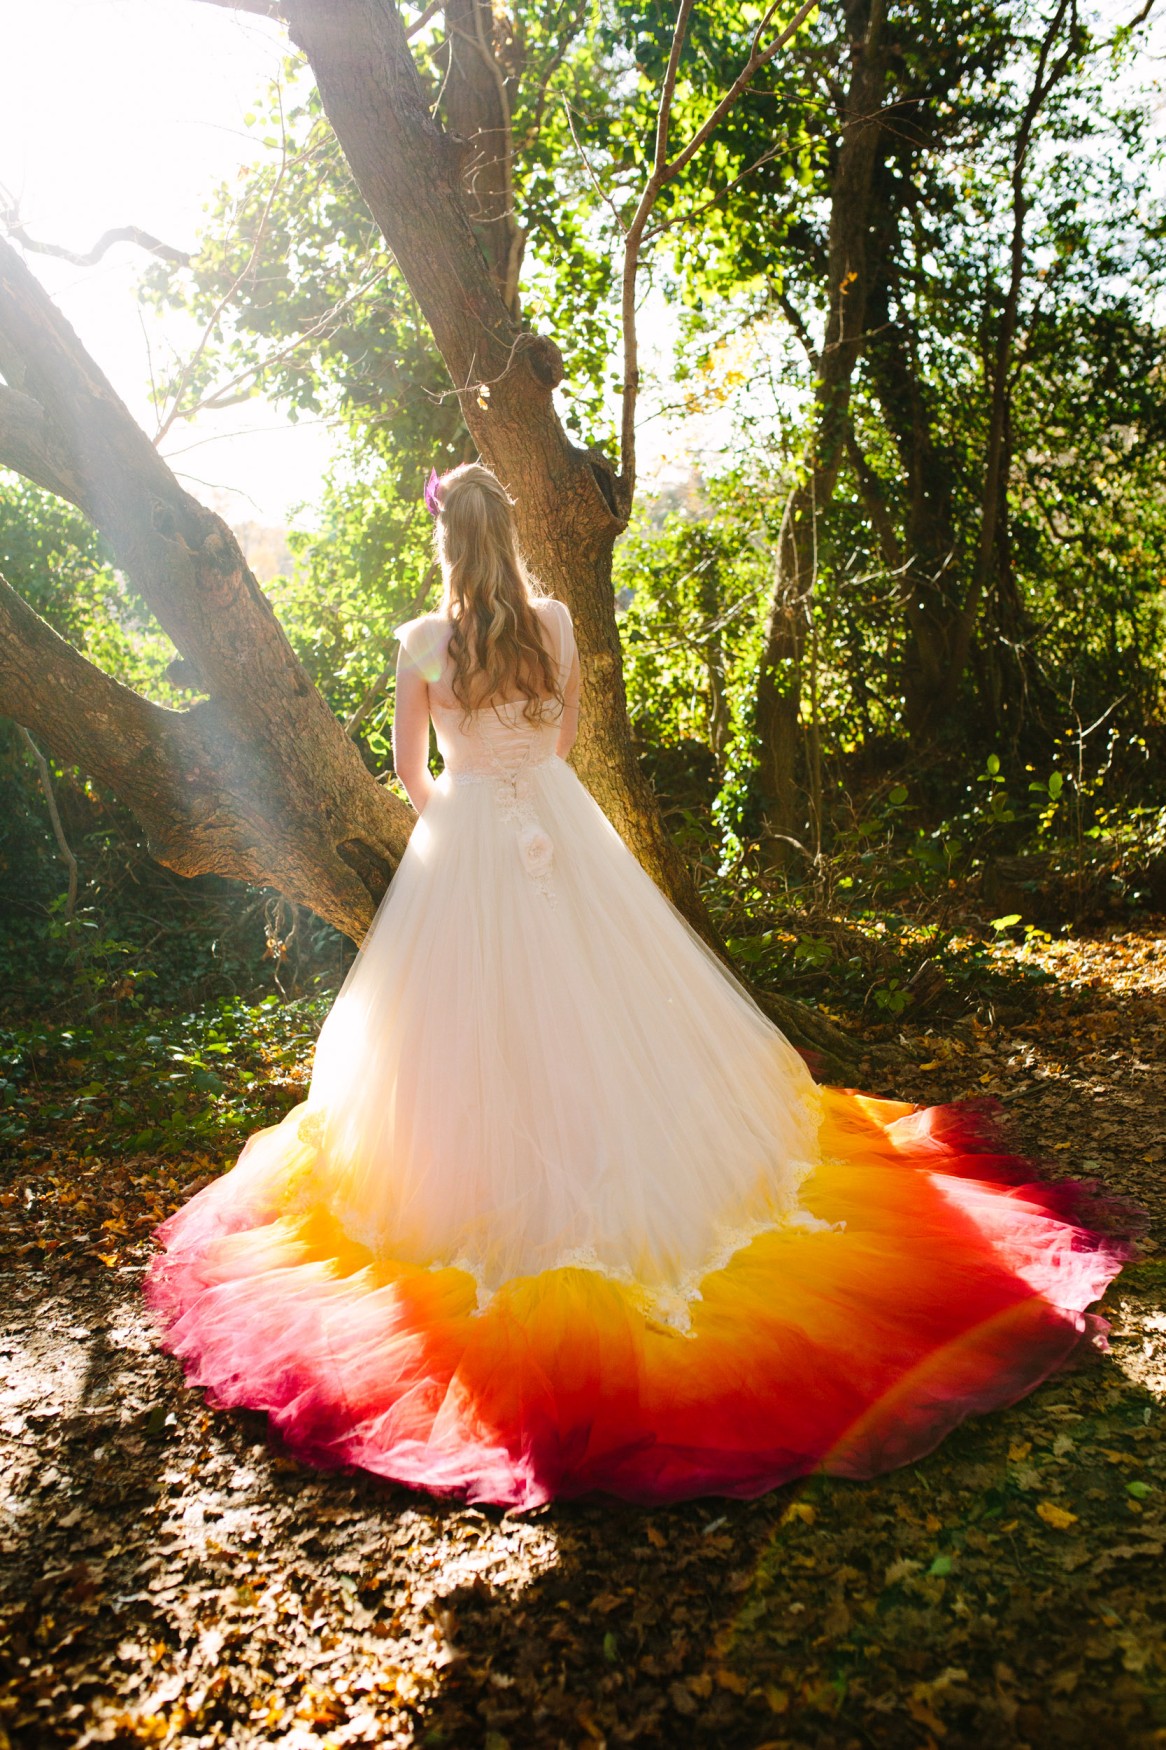 ombre wedding dress - dip dye wedding dress - alternative wedding dress - alternative bridal wear - colourful wedding dress - autumn wedding dress